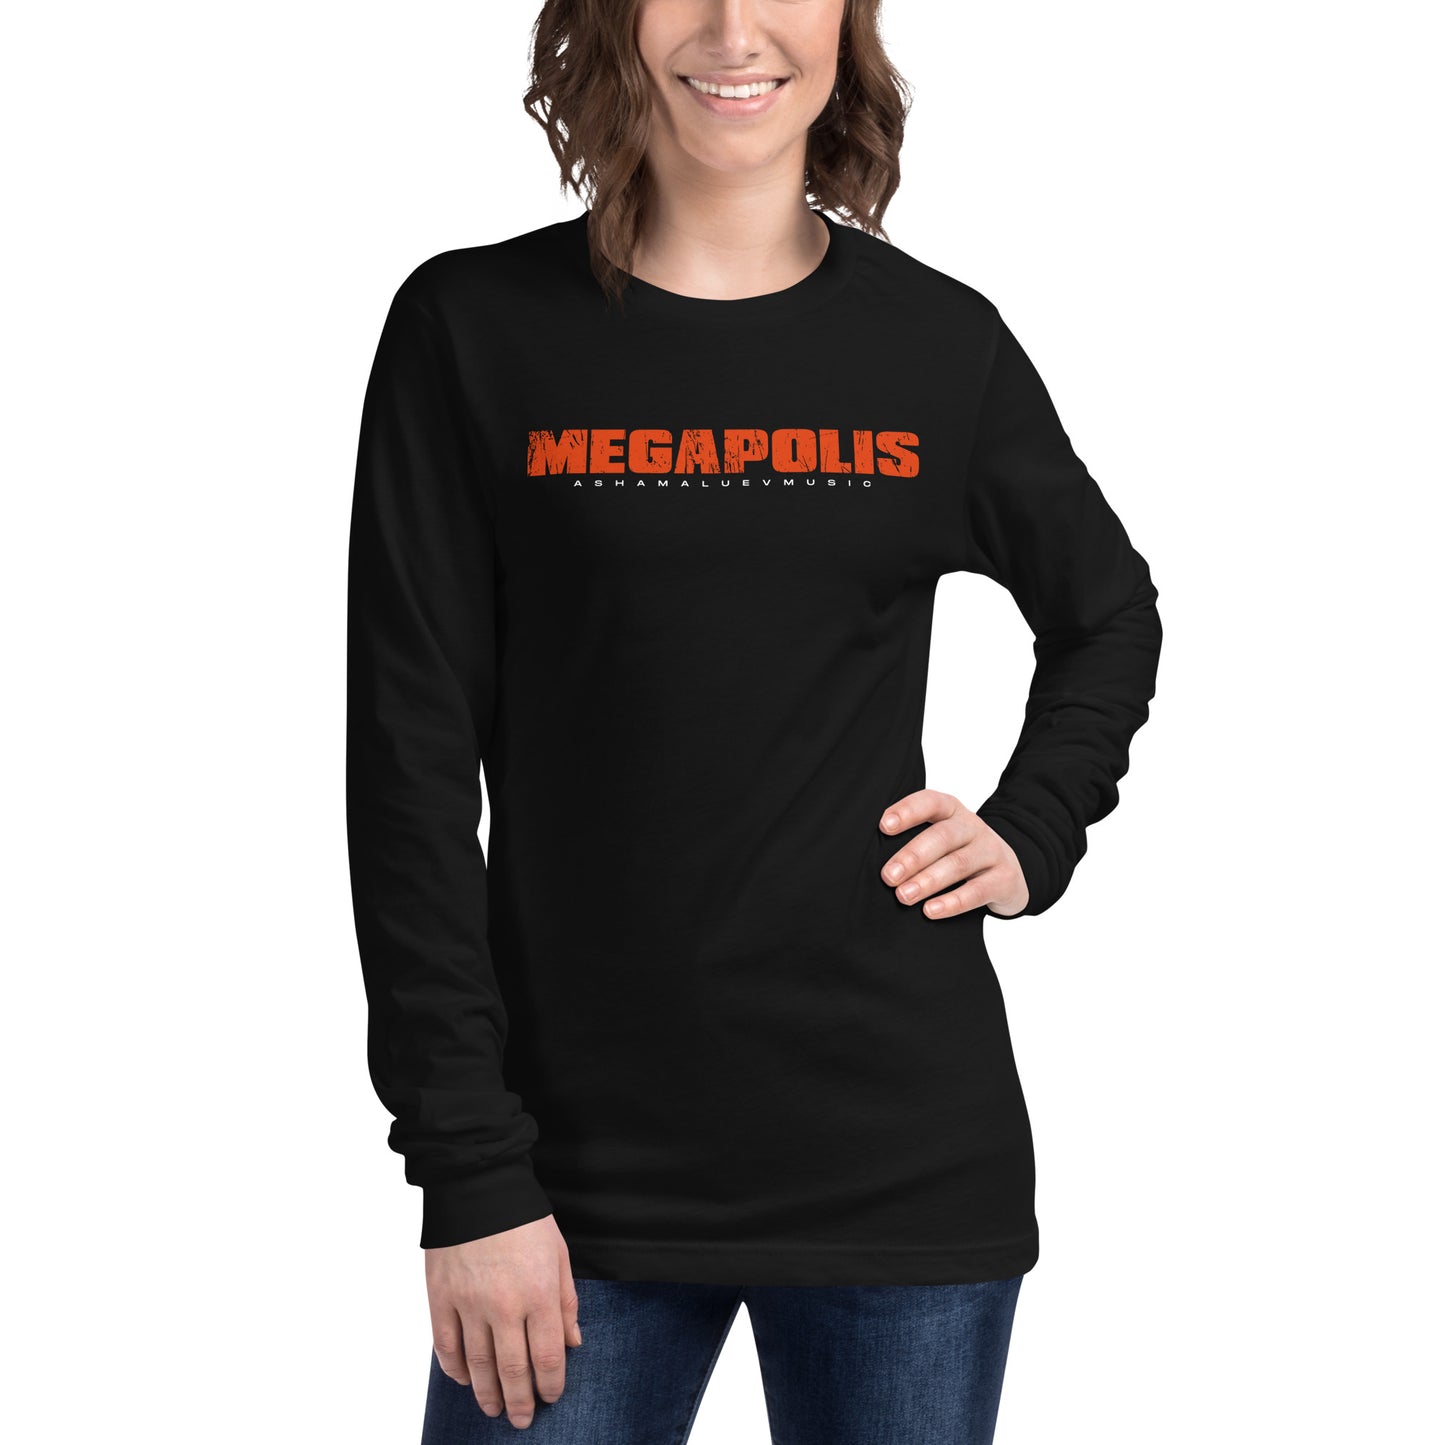 Long Sleeve T-Shirt "Megapolis"